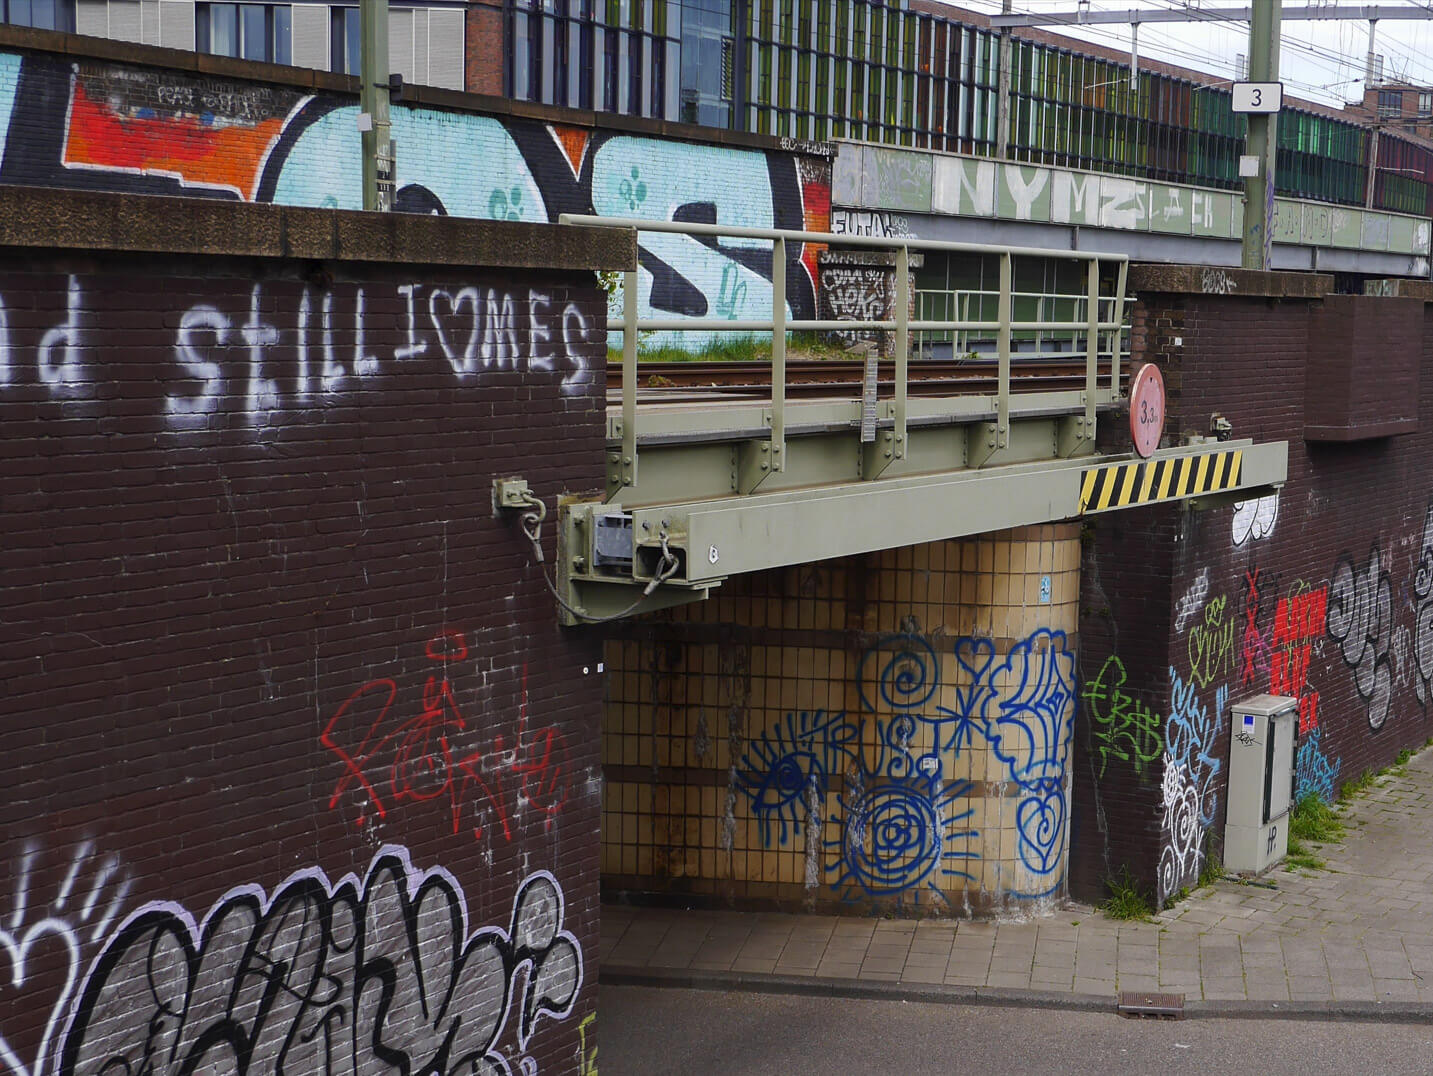 A railway bridge covered in graffiti.